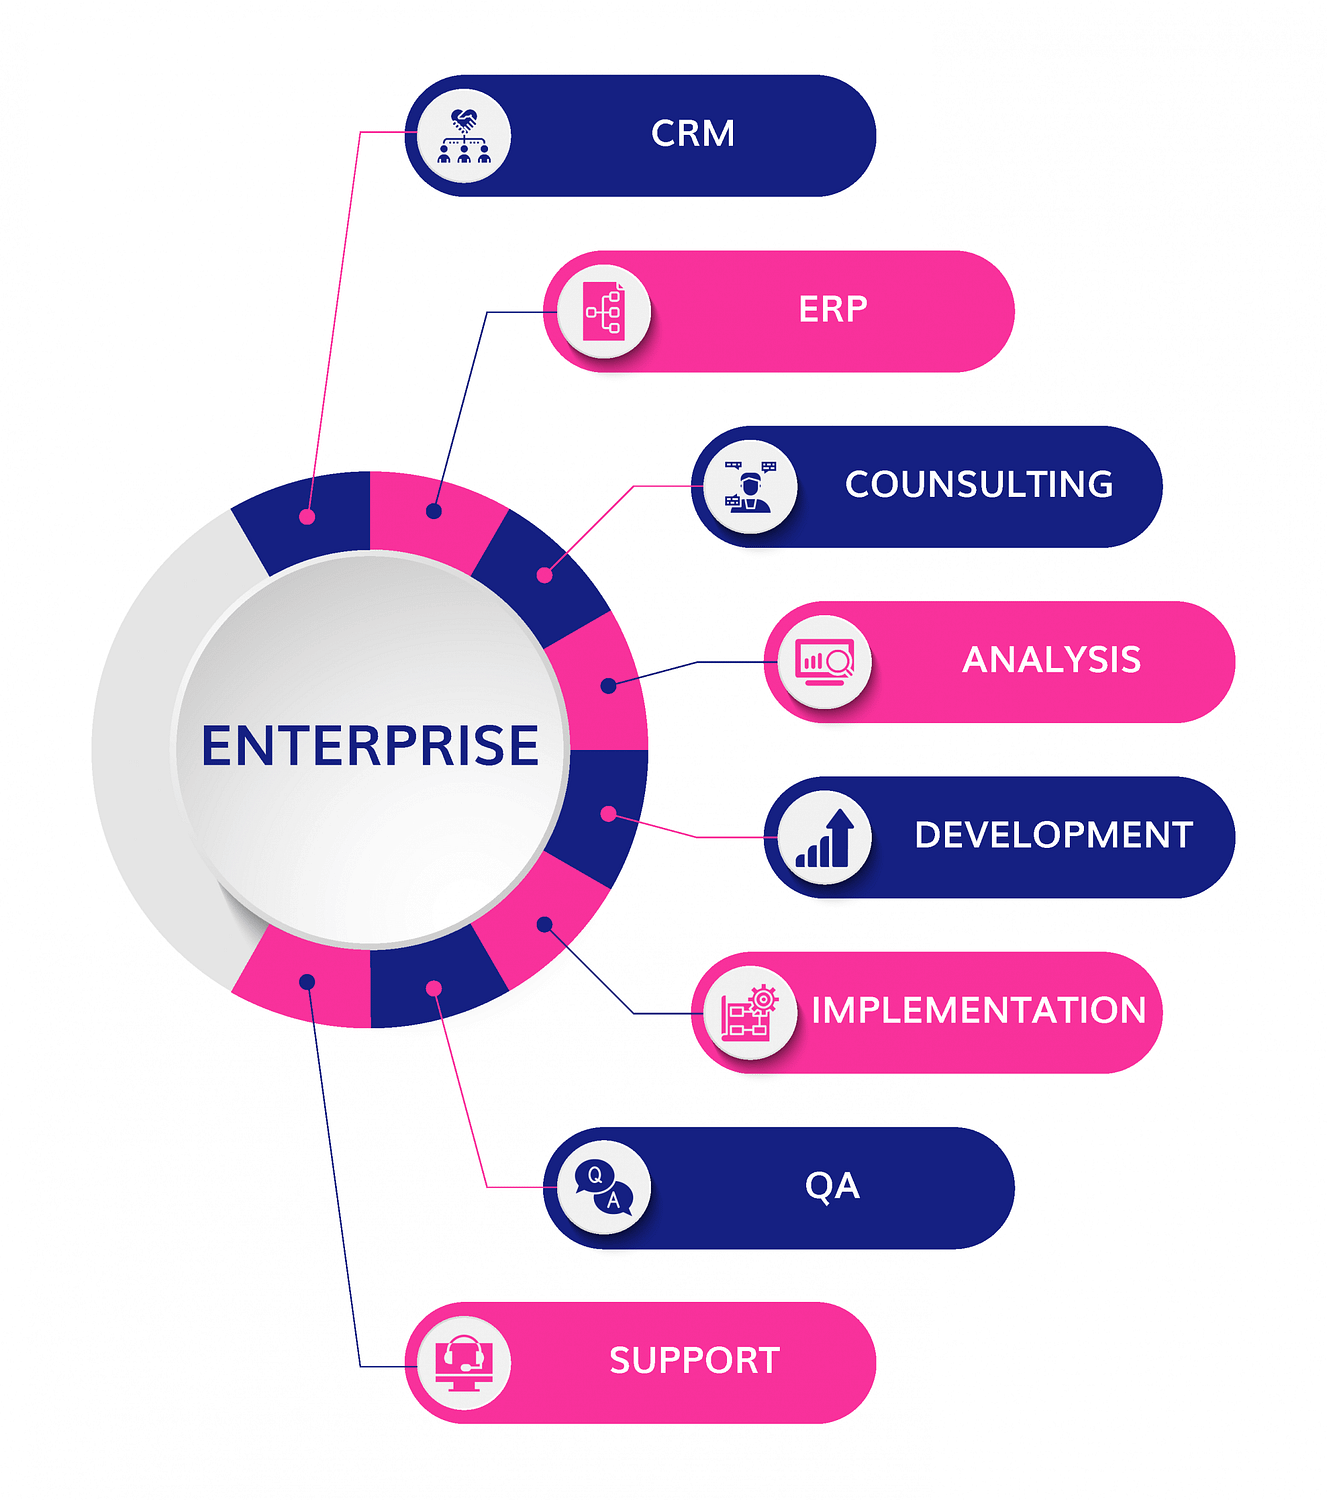 enterprise application development